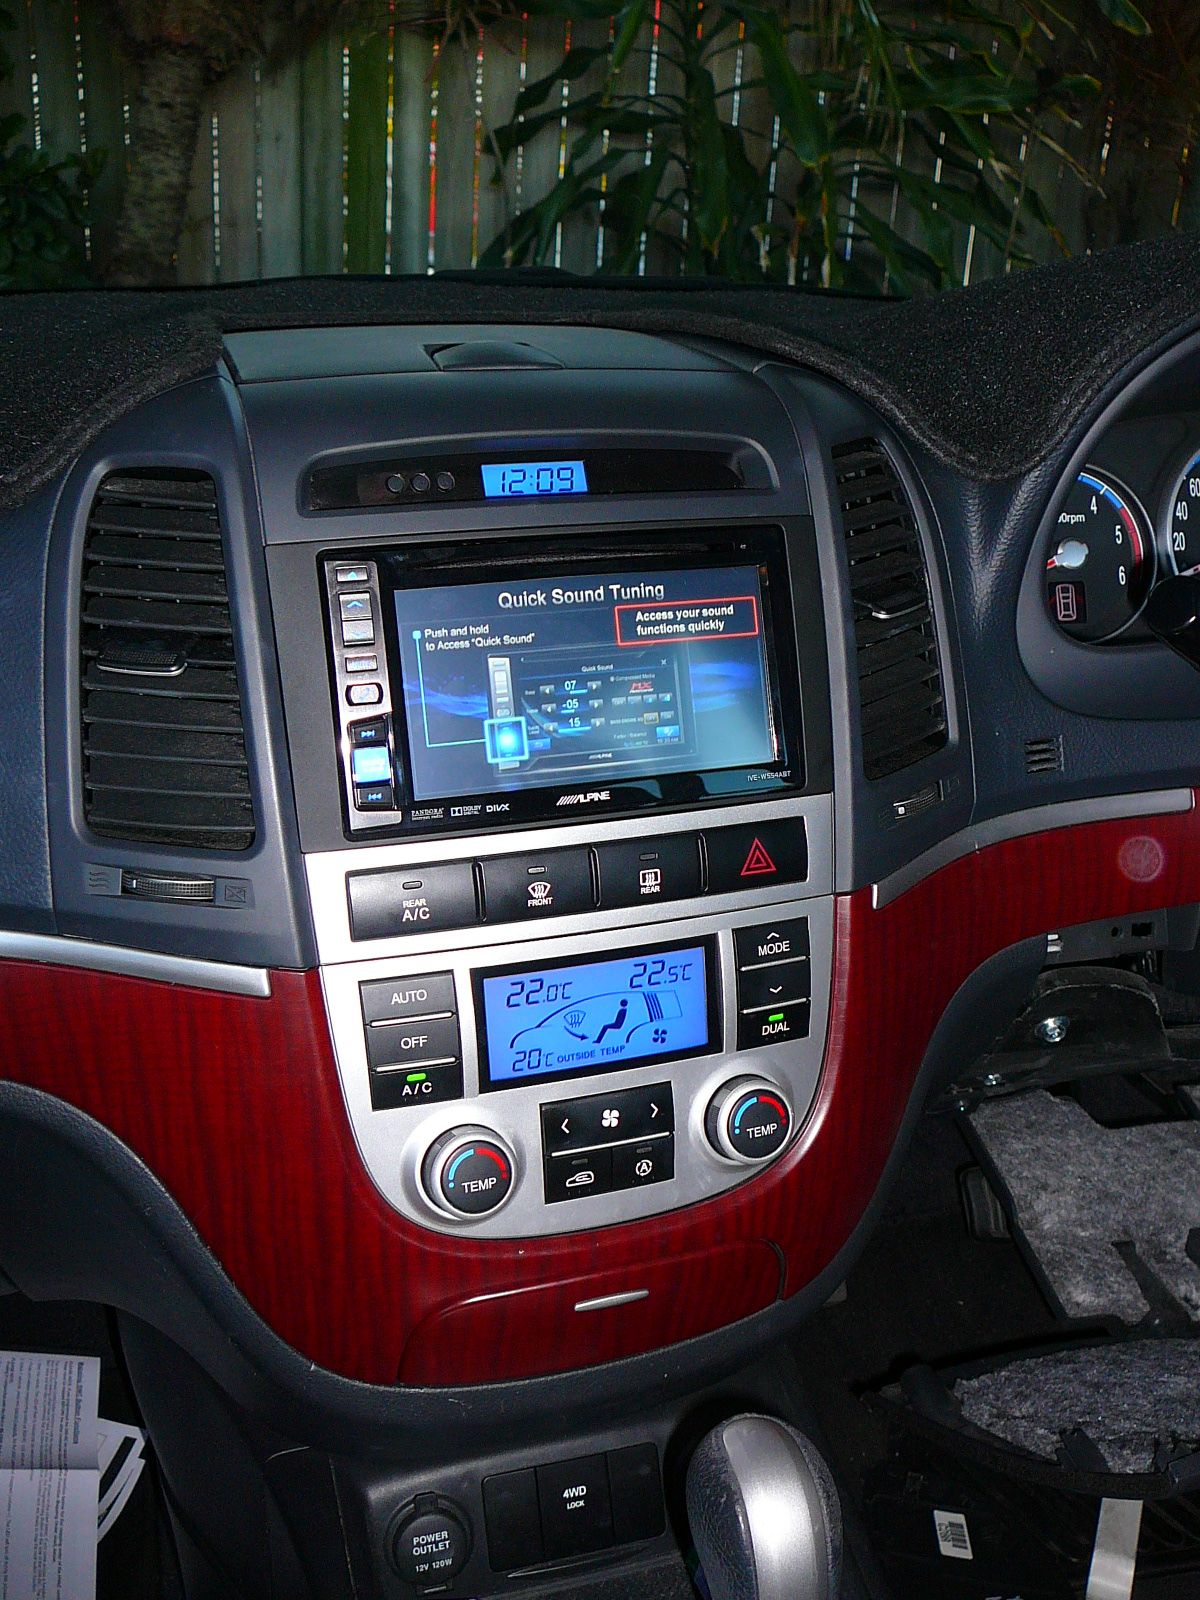 Hyundai Santa Fe 2008, Alpine IVE-W554ABT CD,DVD, Radio, Touchscreen